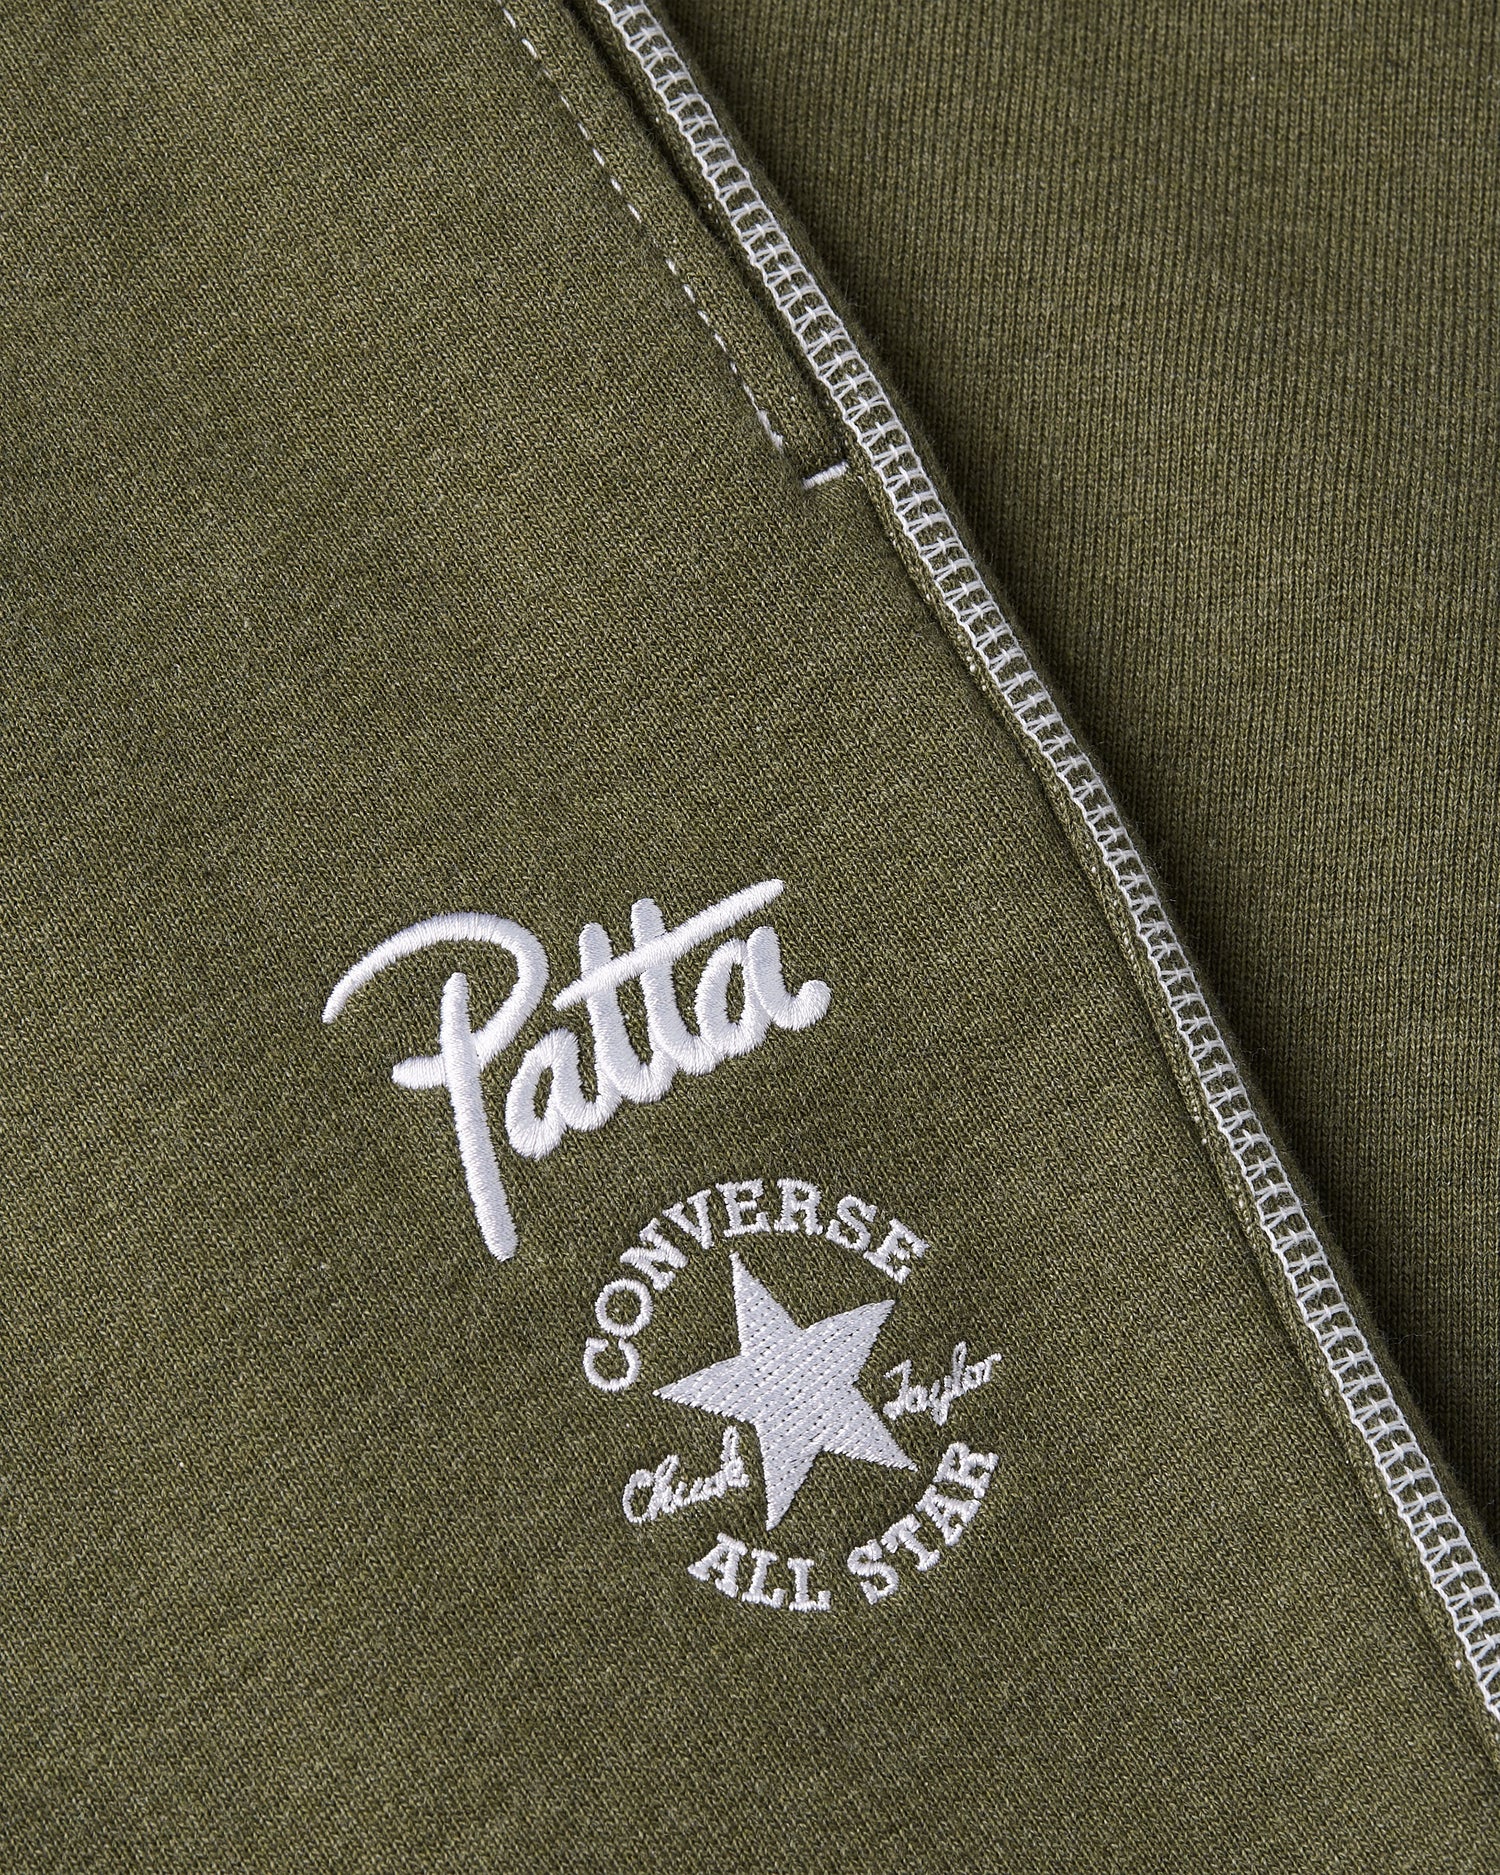 Patta x Converse Rain or Shine Pant (Utility Green Heather)